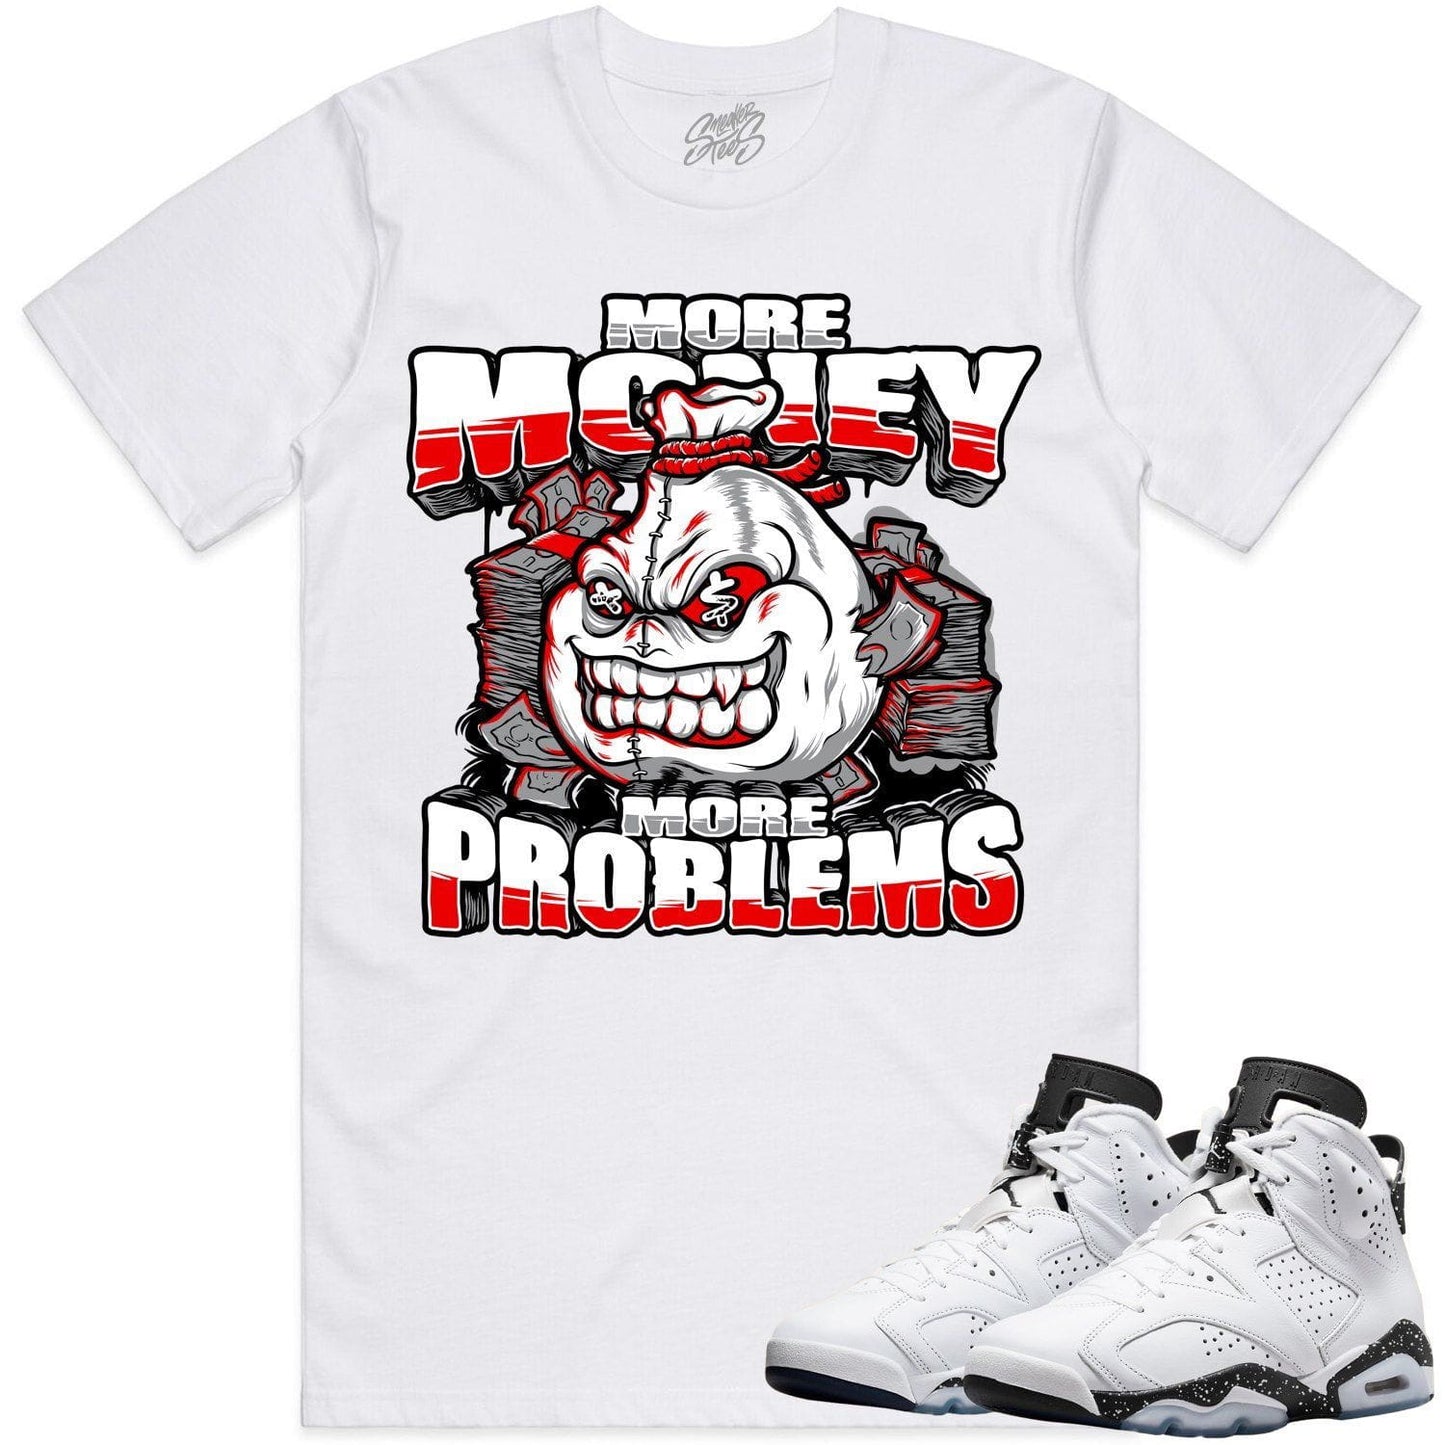 Oreo 6s Shirts - Jordan 6 Reverse Oreo 6s Sneaker Tees - More Problems